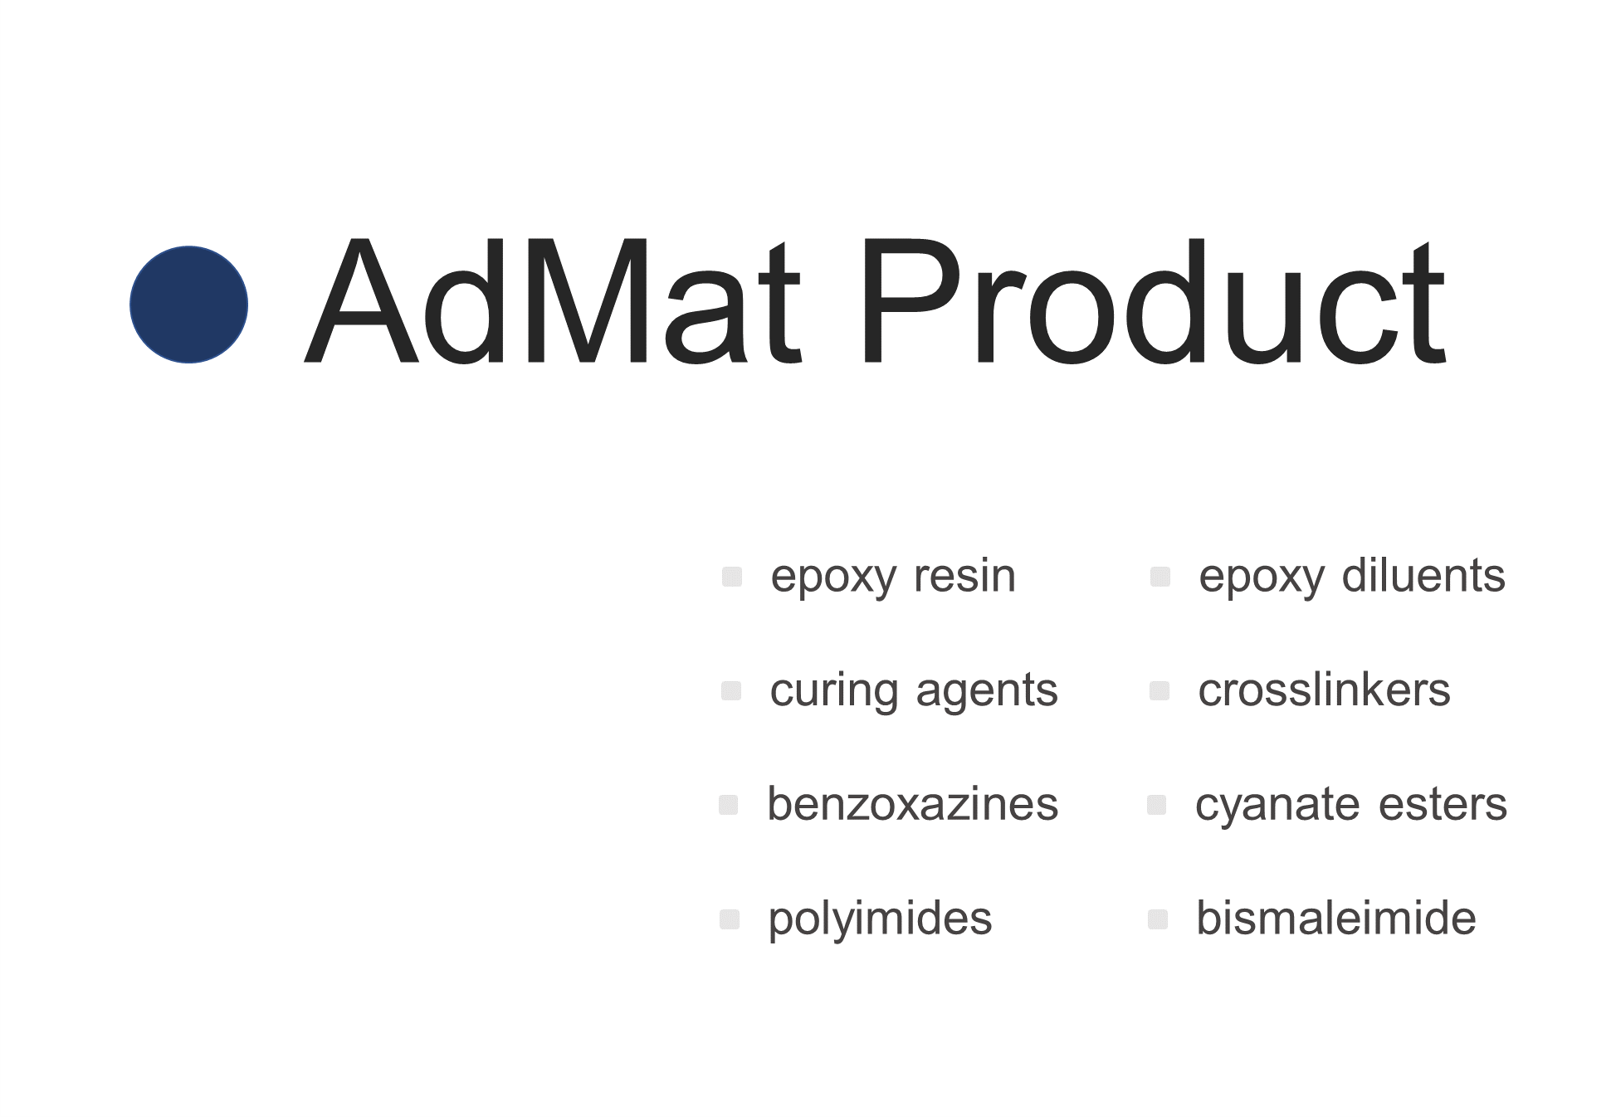 AdMat Product